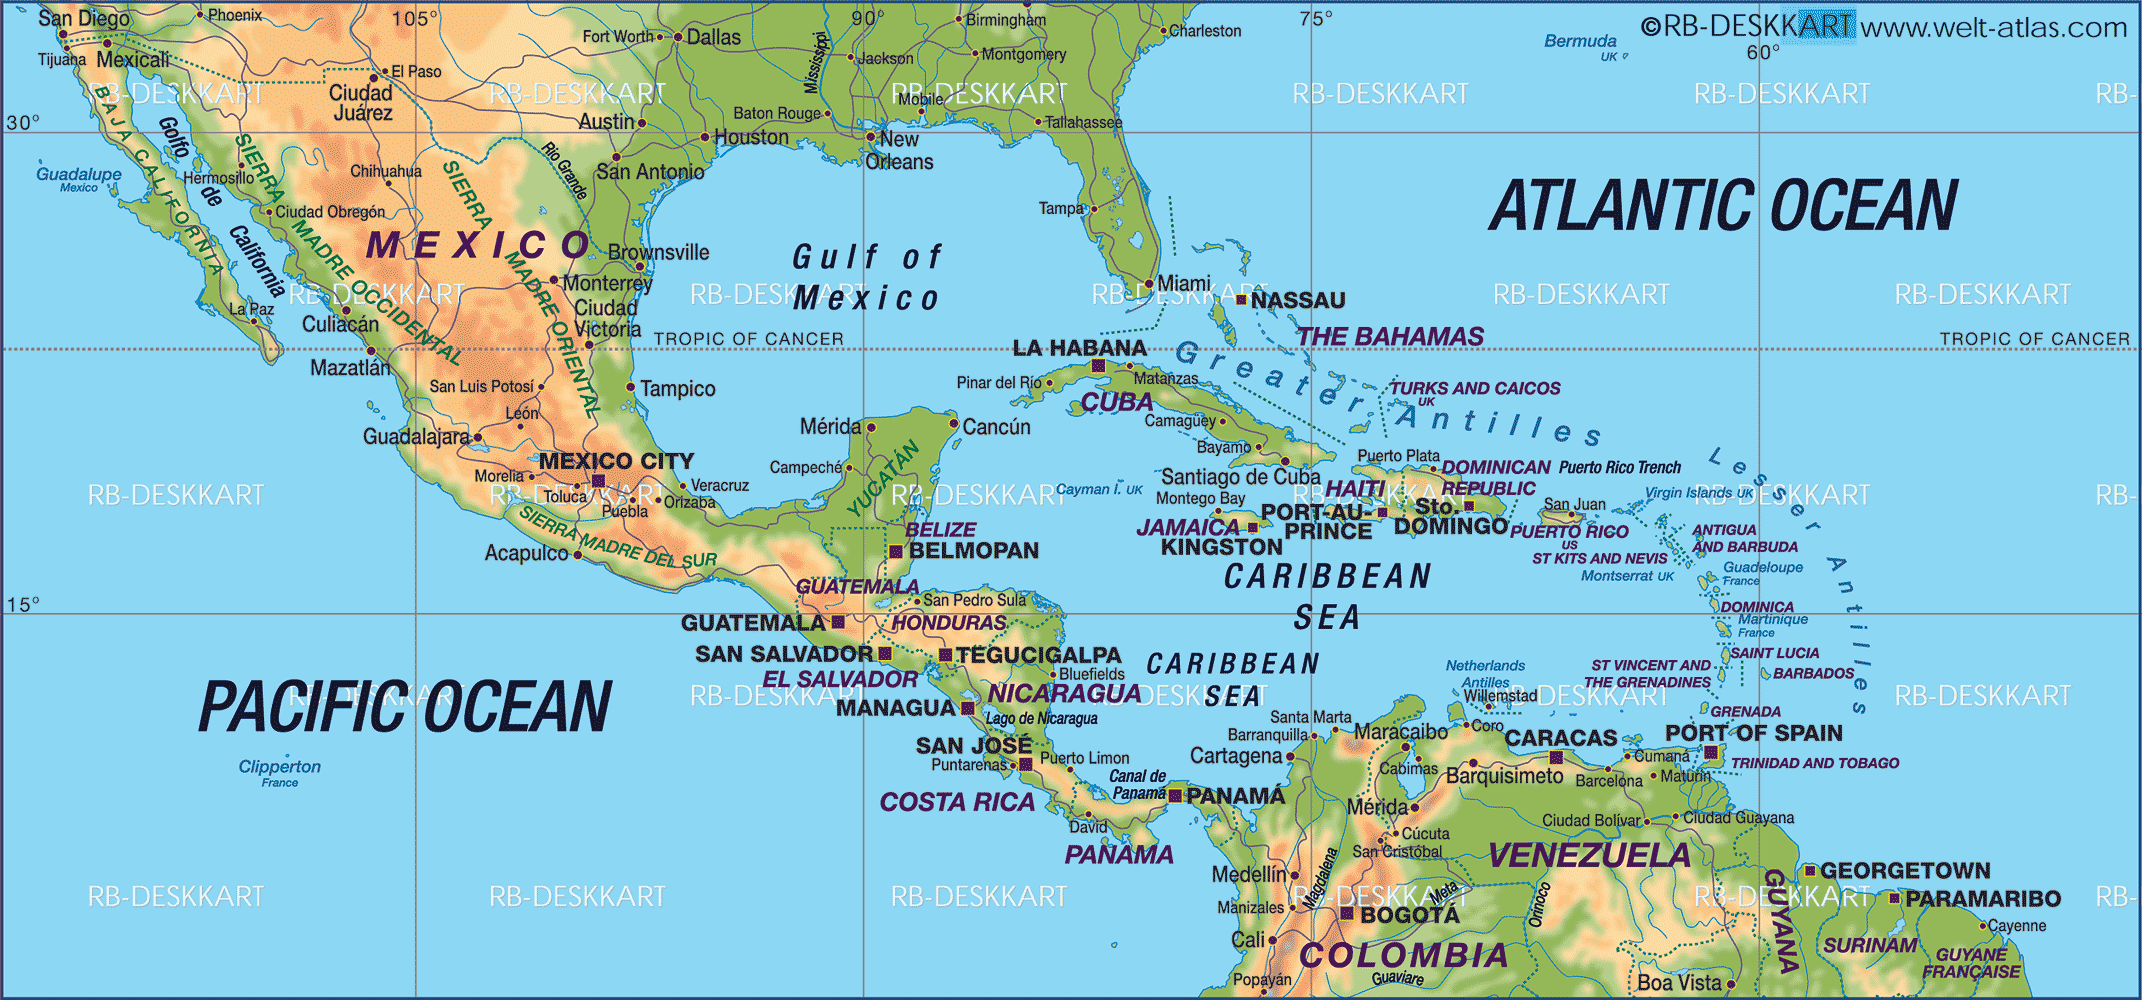 Cayman Islands Map Caribbean Region